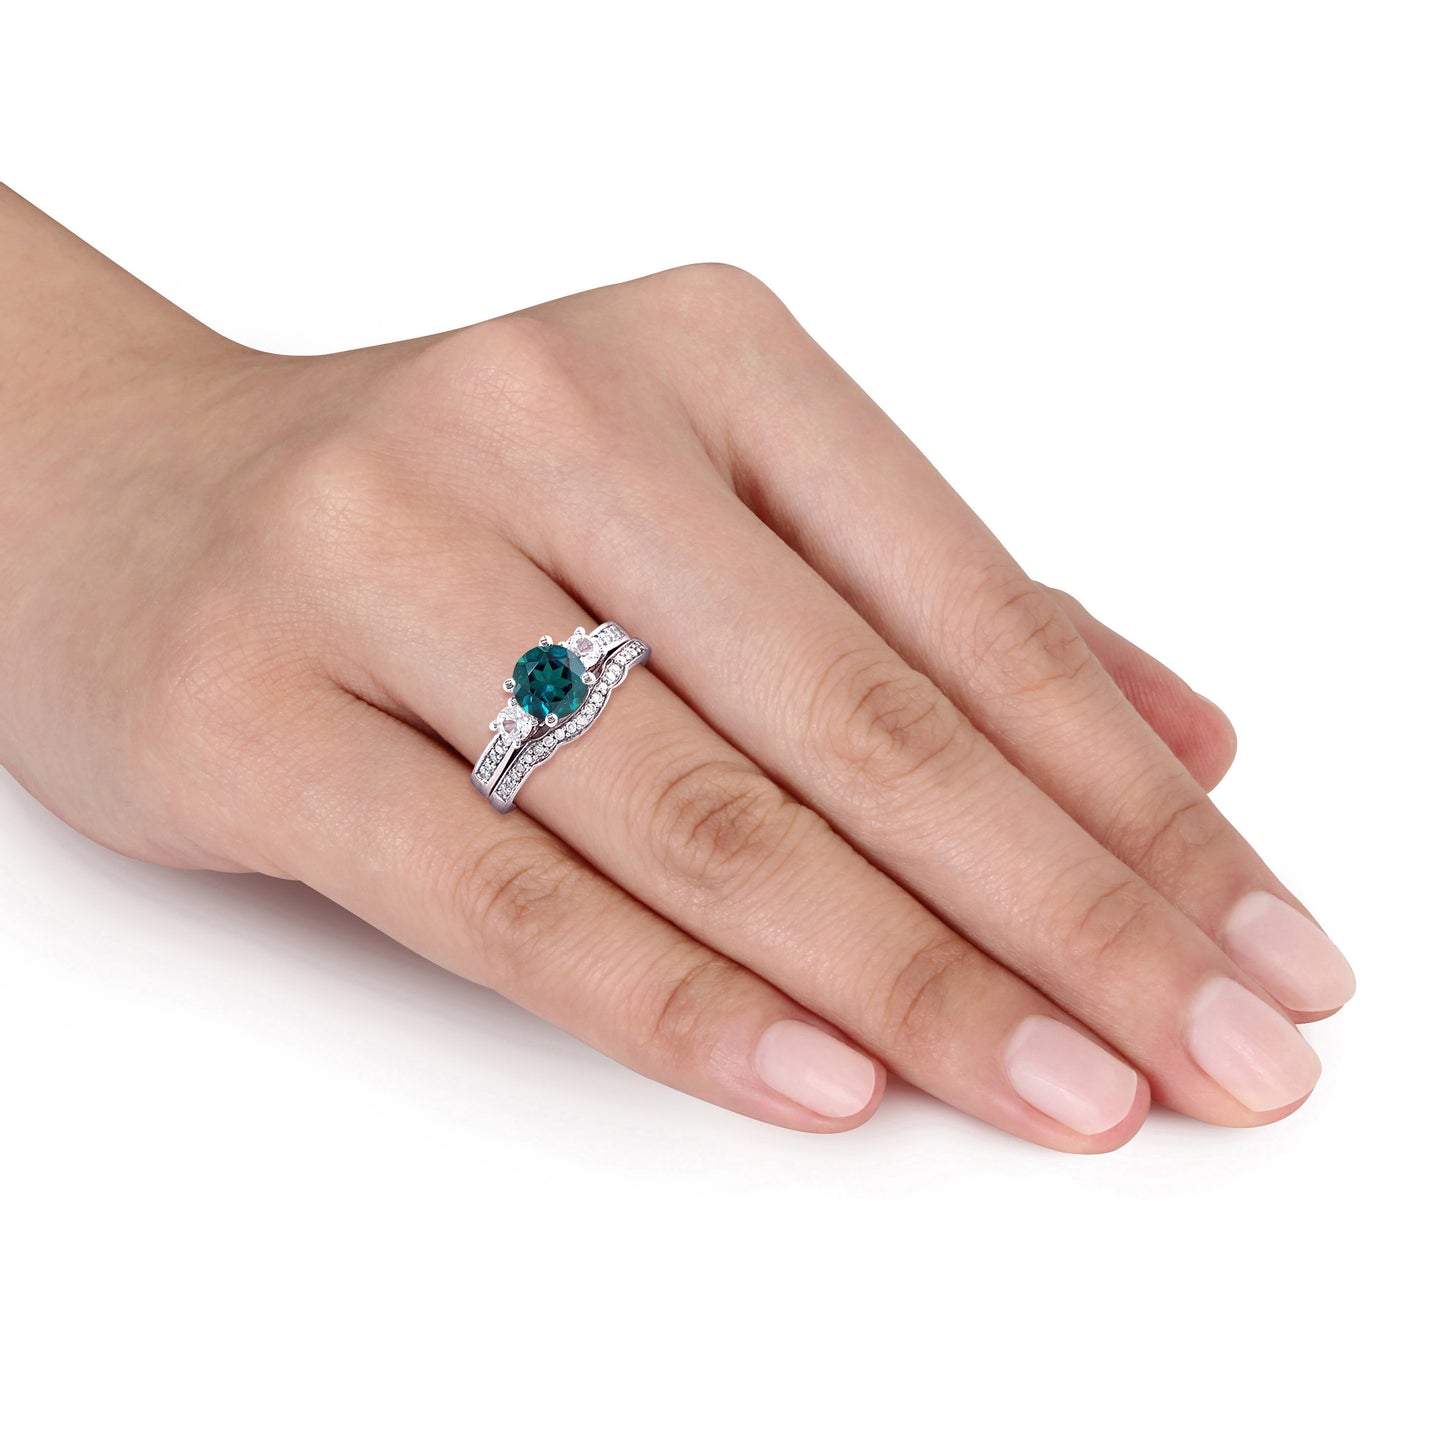 Created Emerald & White Sapphire & Diamond Wedding Set Ring in 10k White